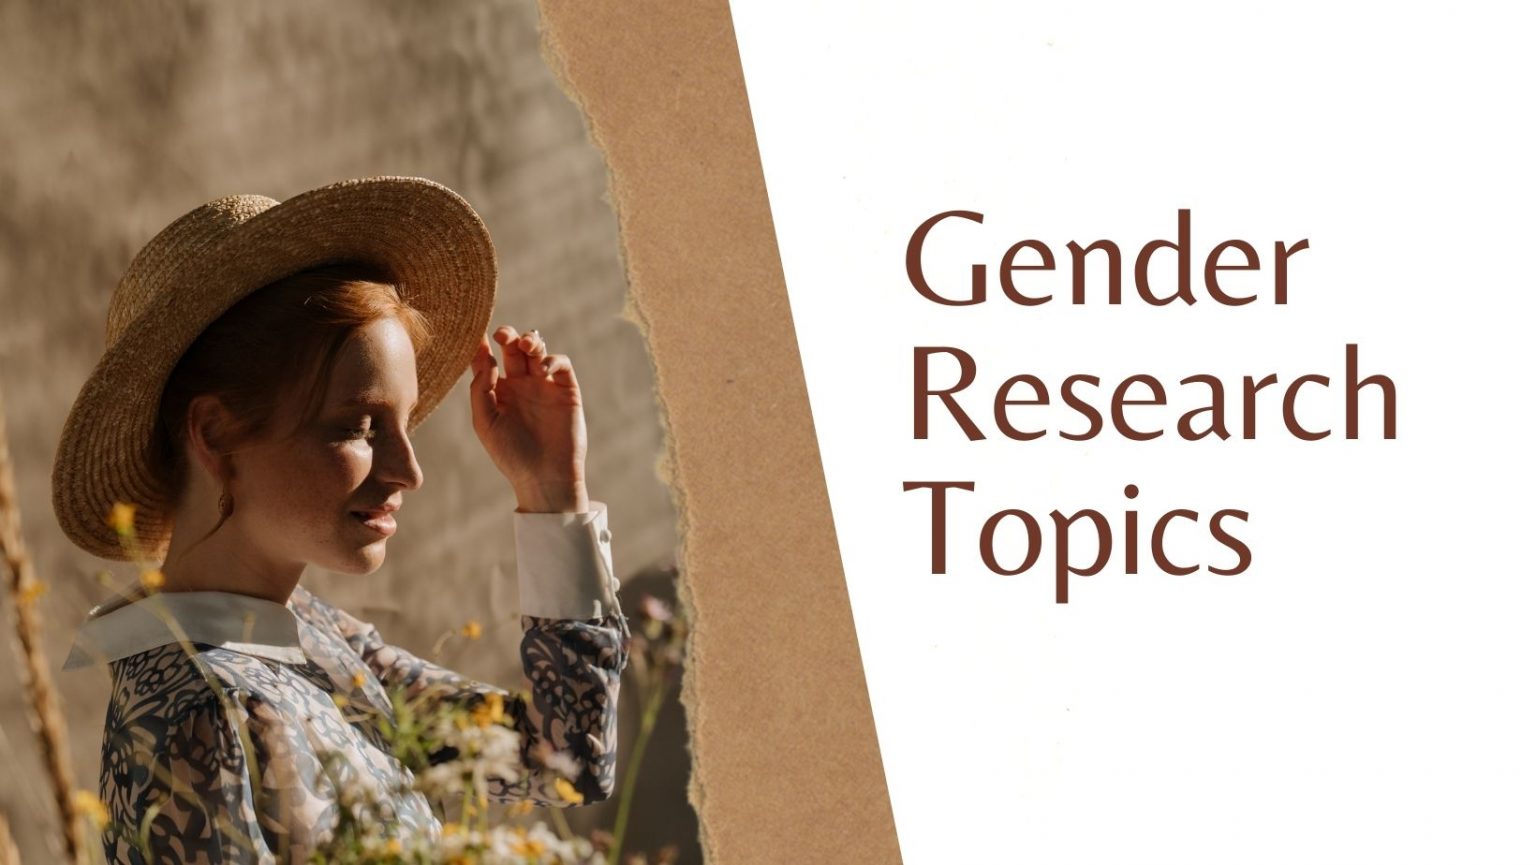 research topics for gender studies